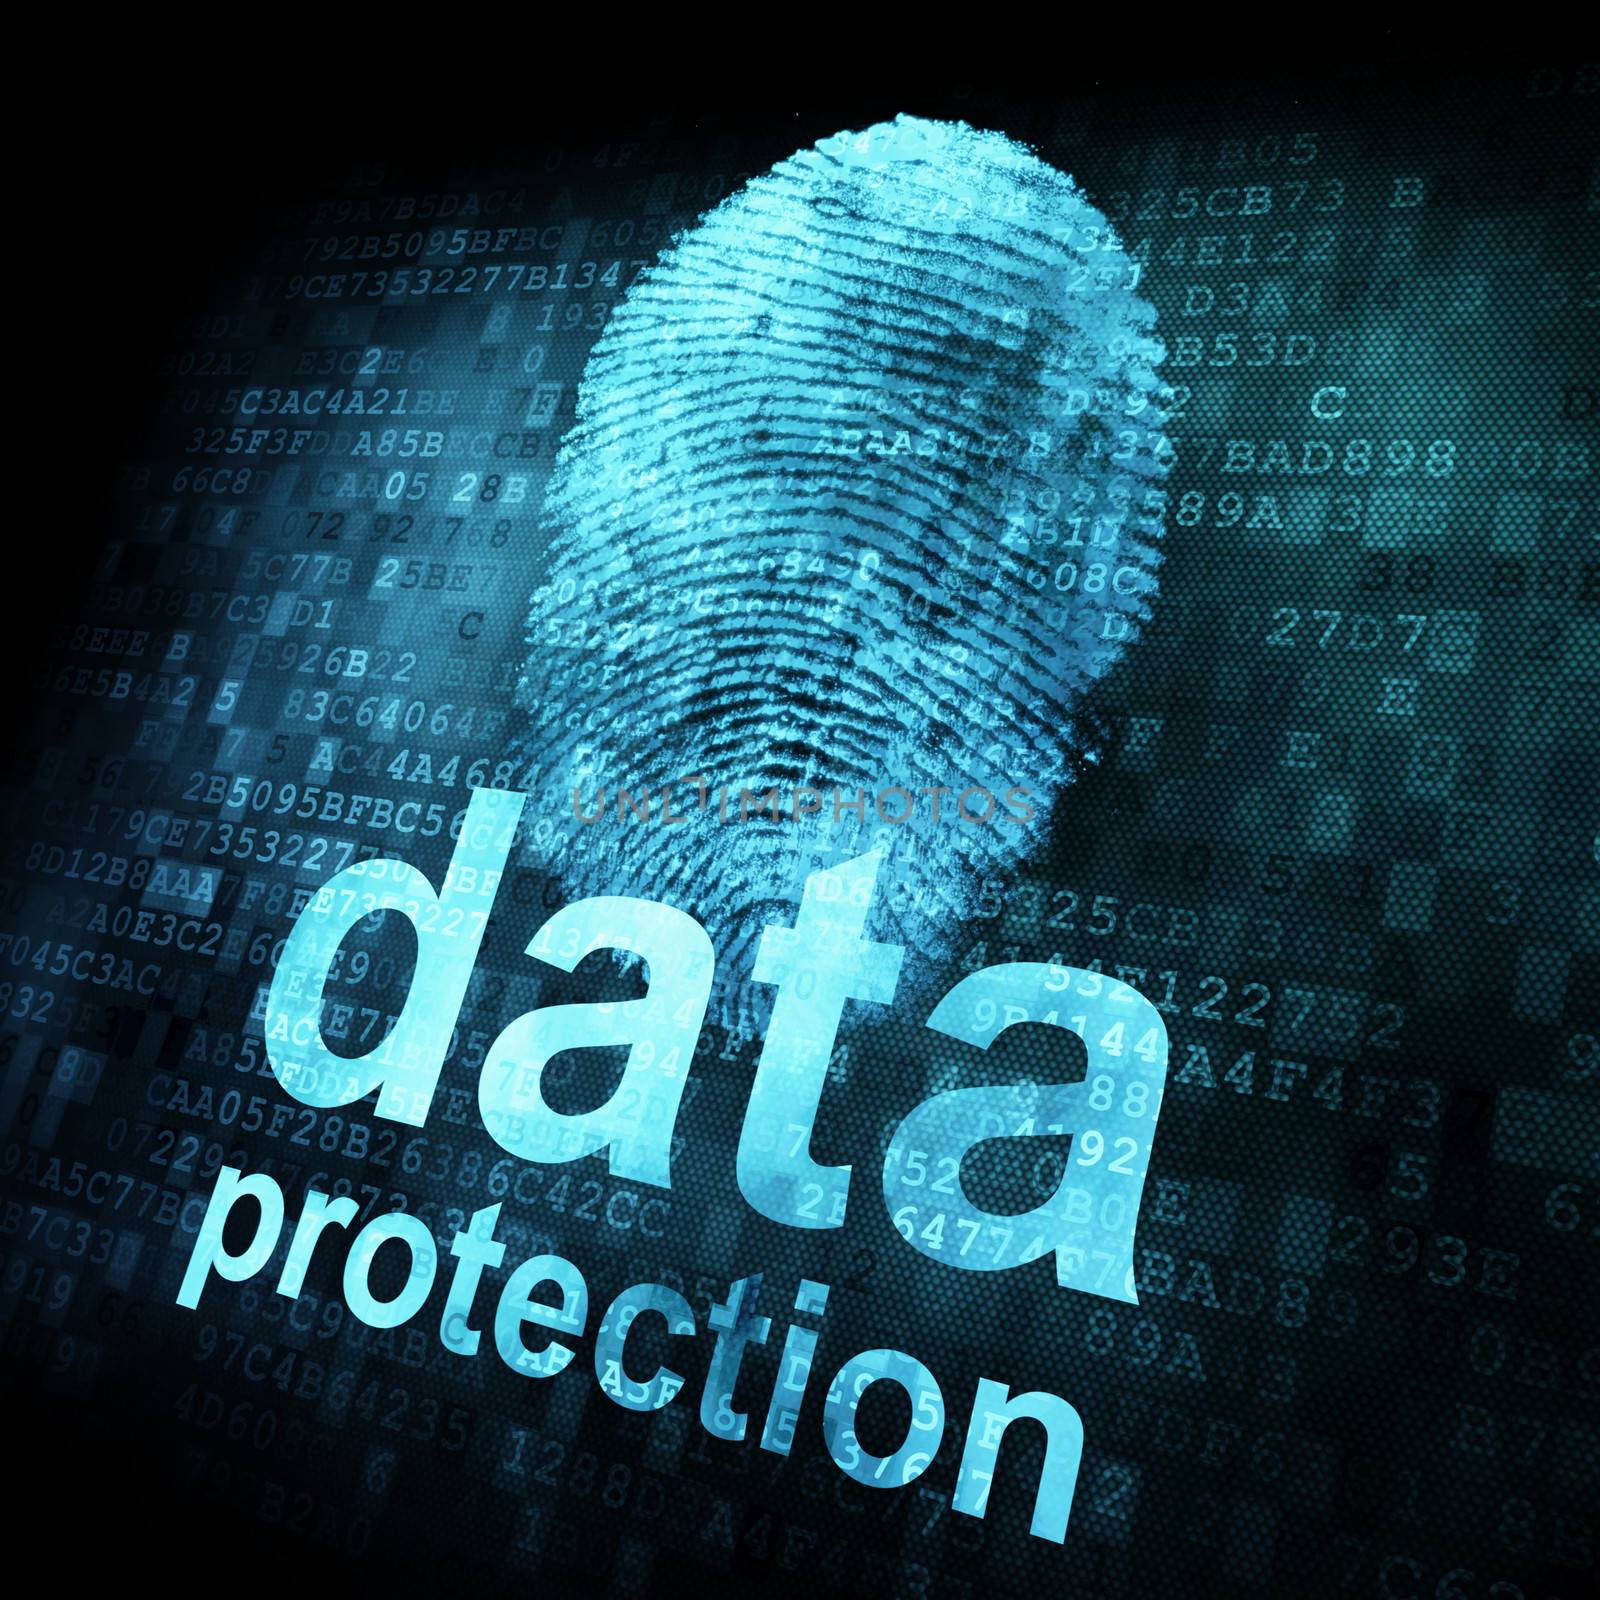 Fingerprint and data protection on digital screen by maxkabakov